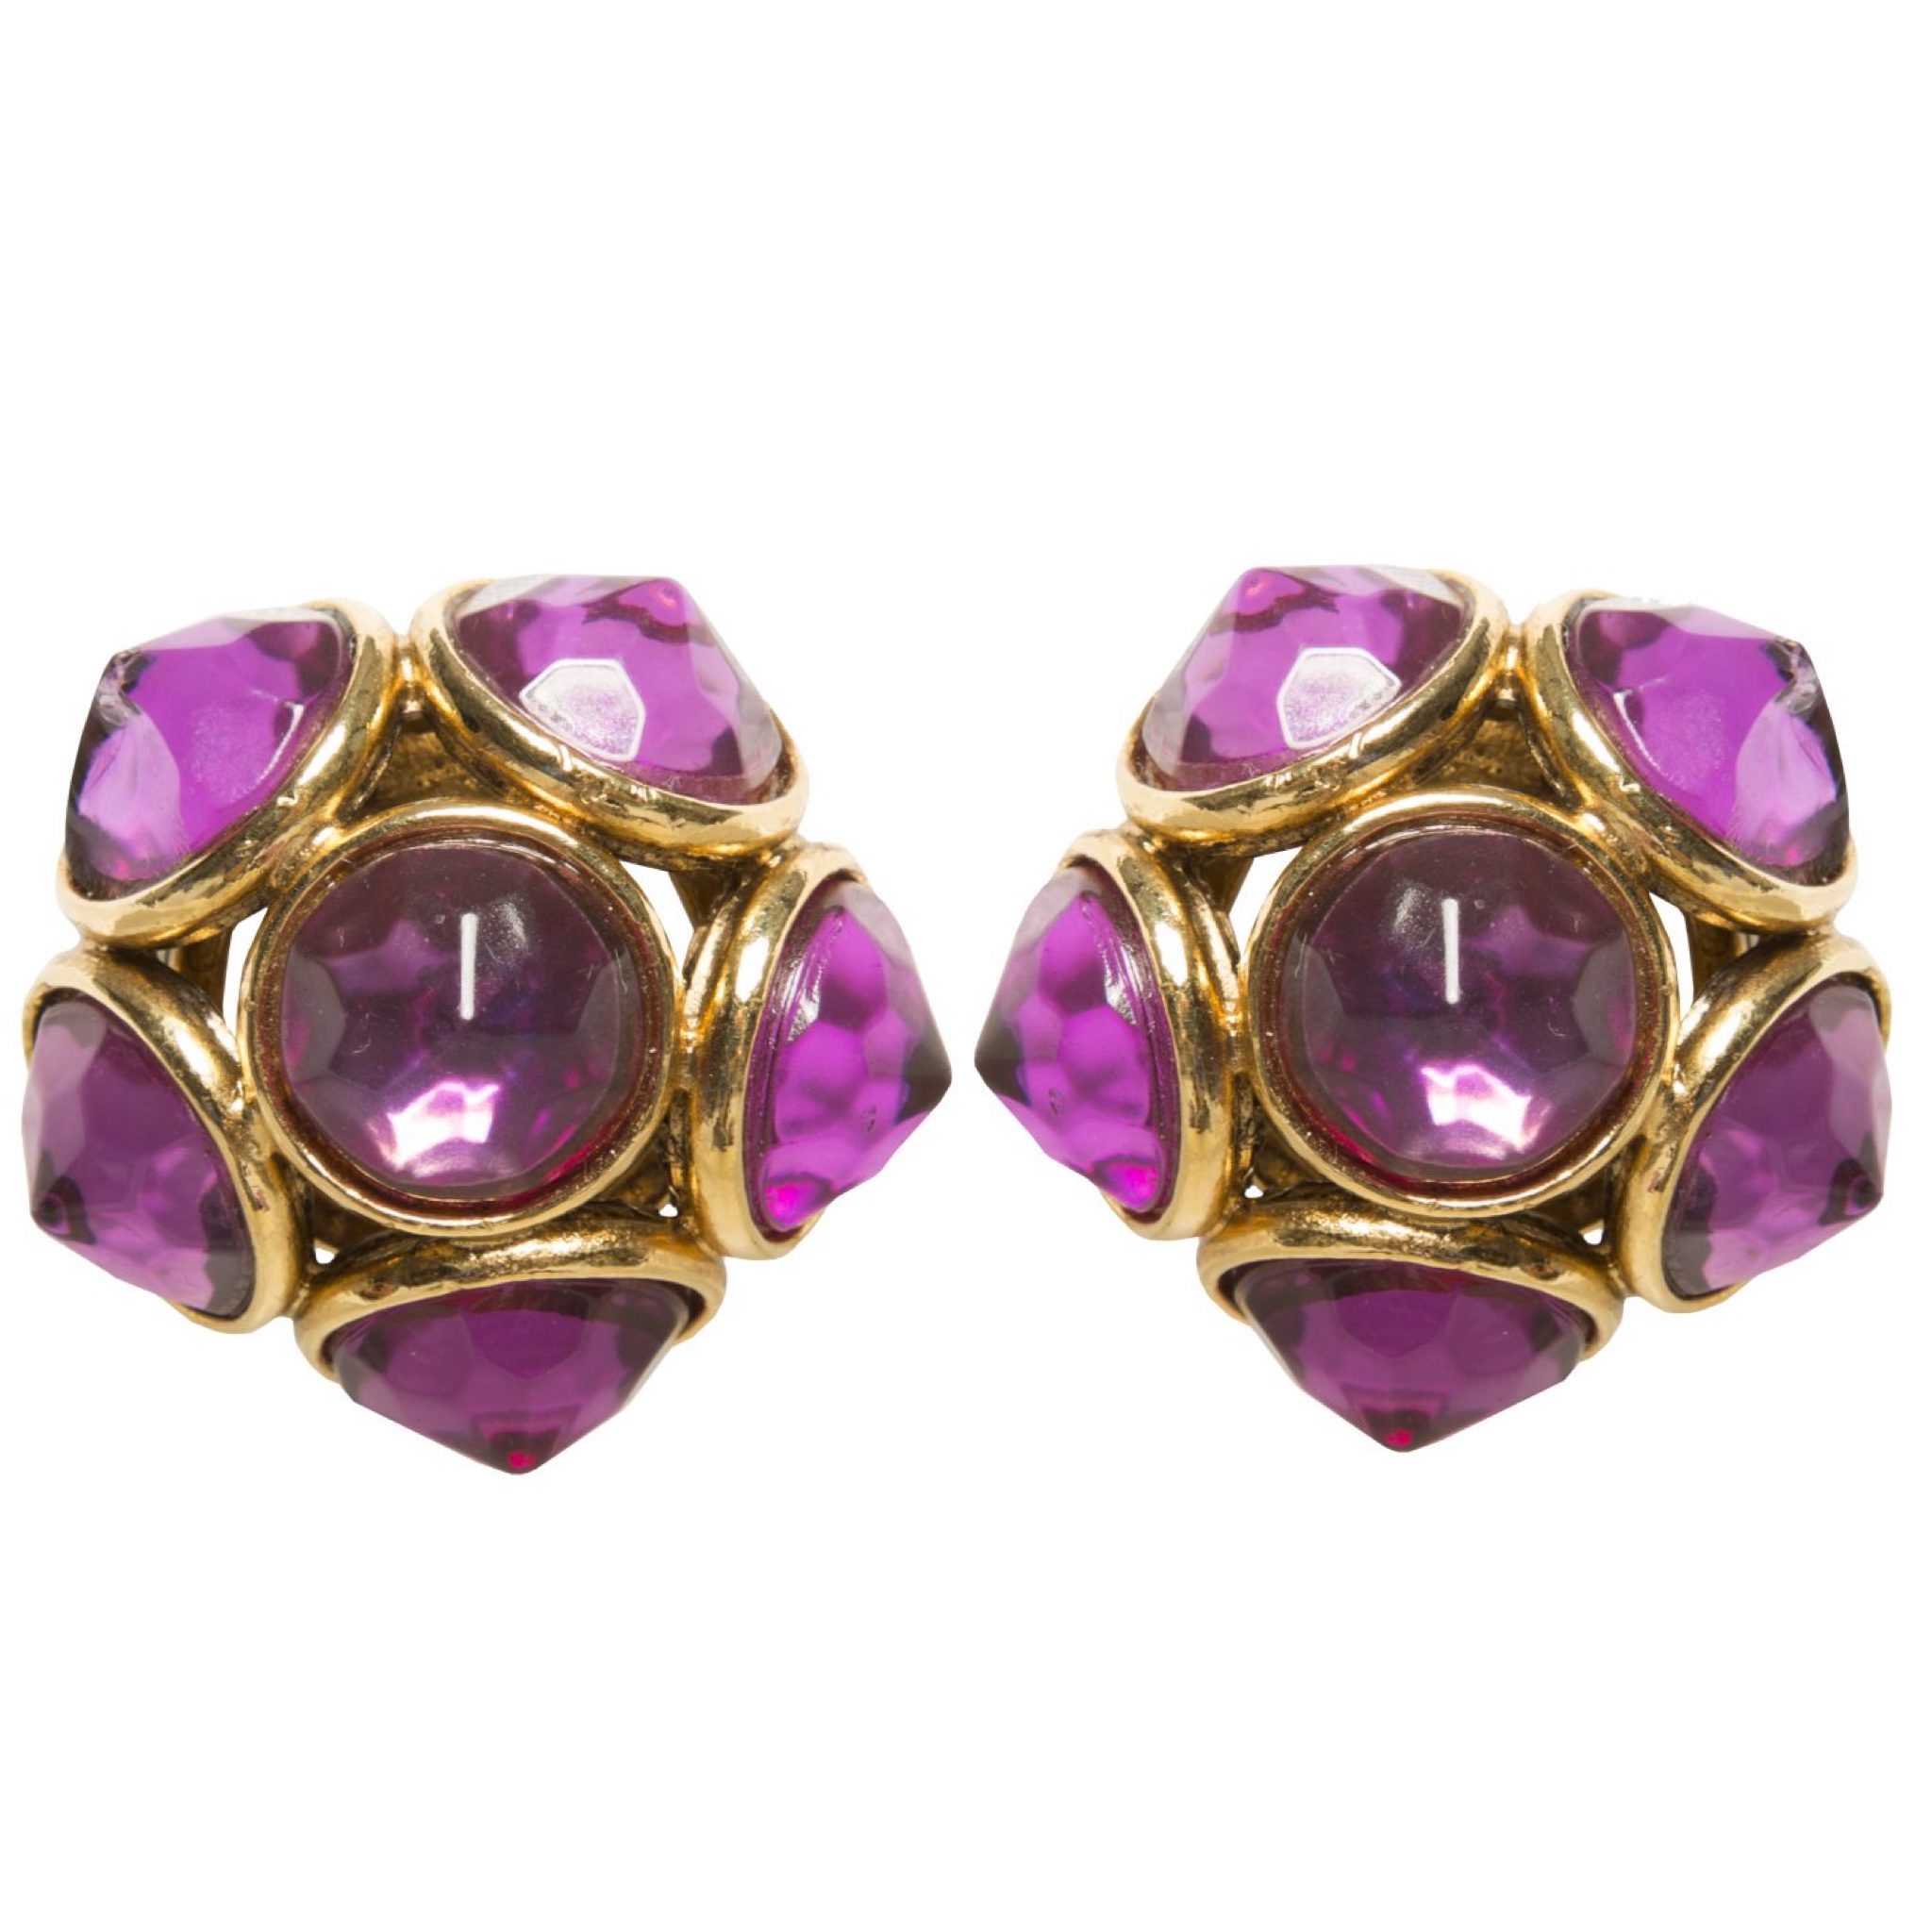 Vintage faced purple stones round earrings